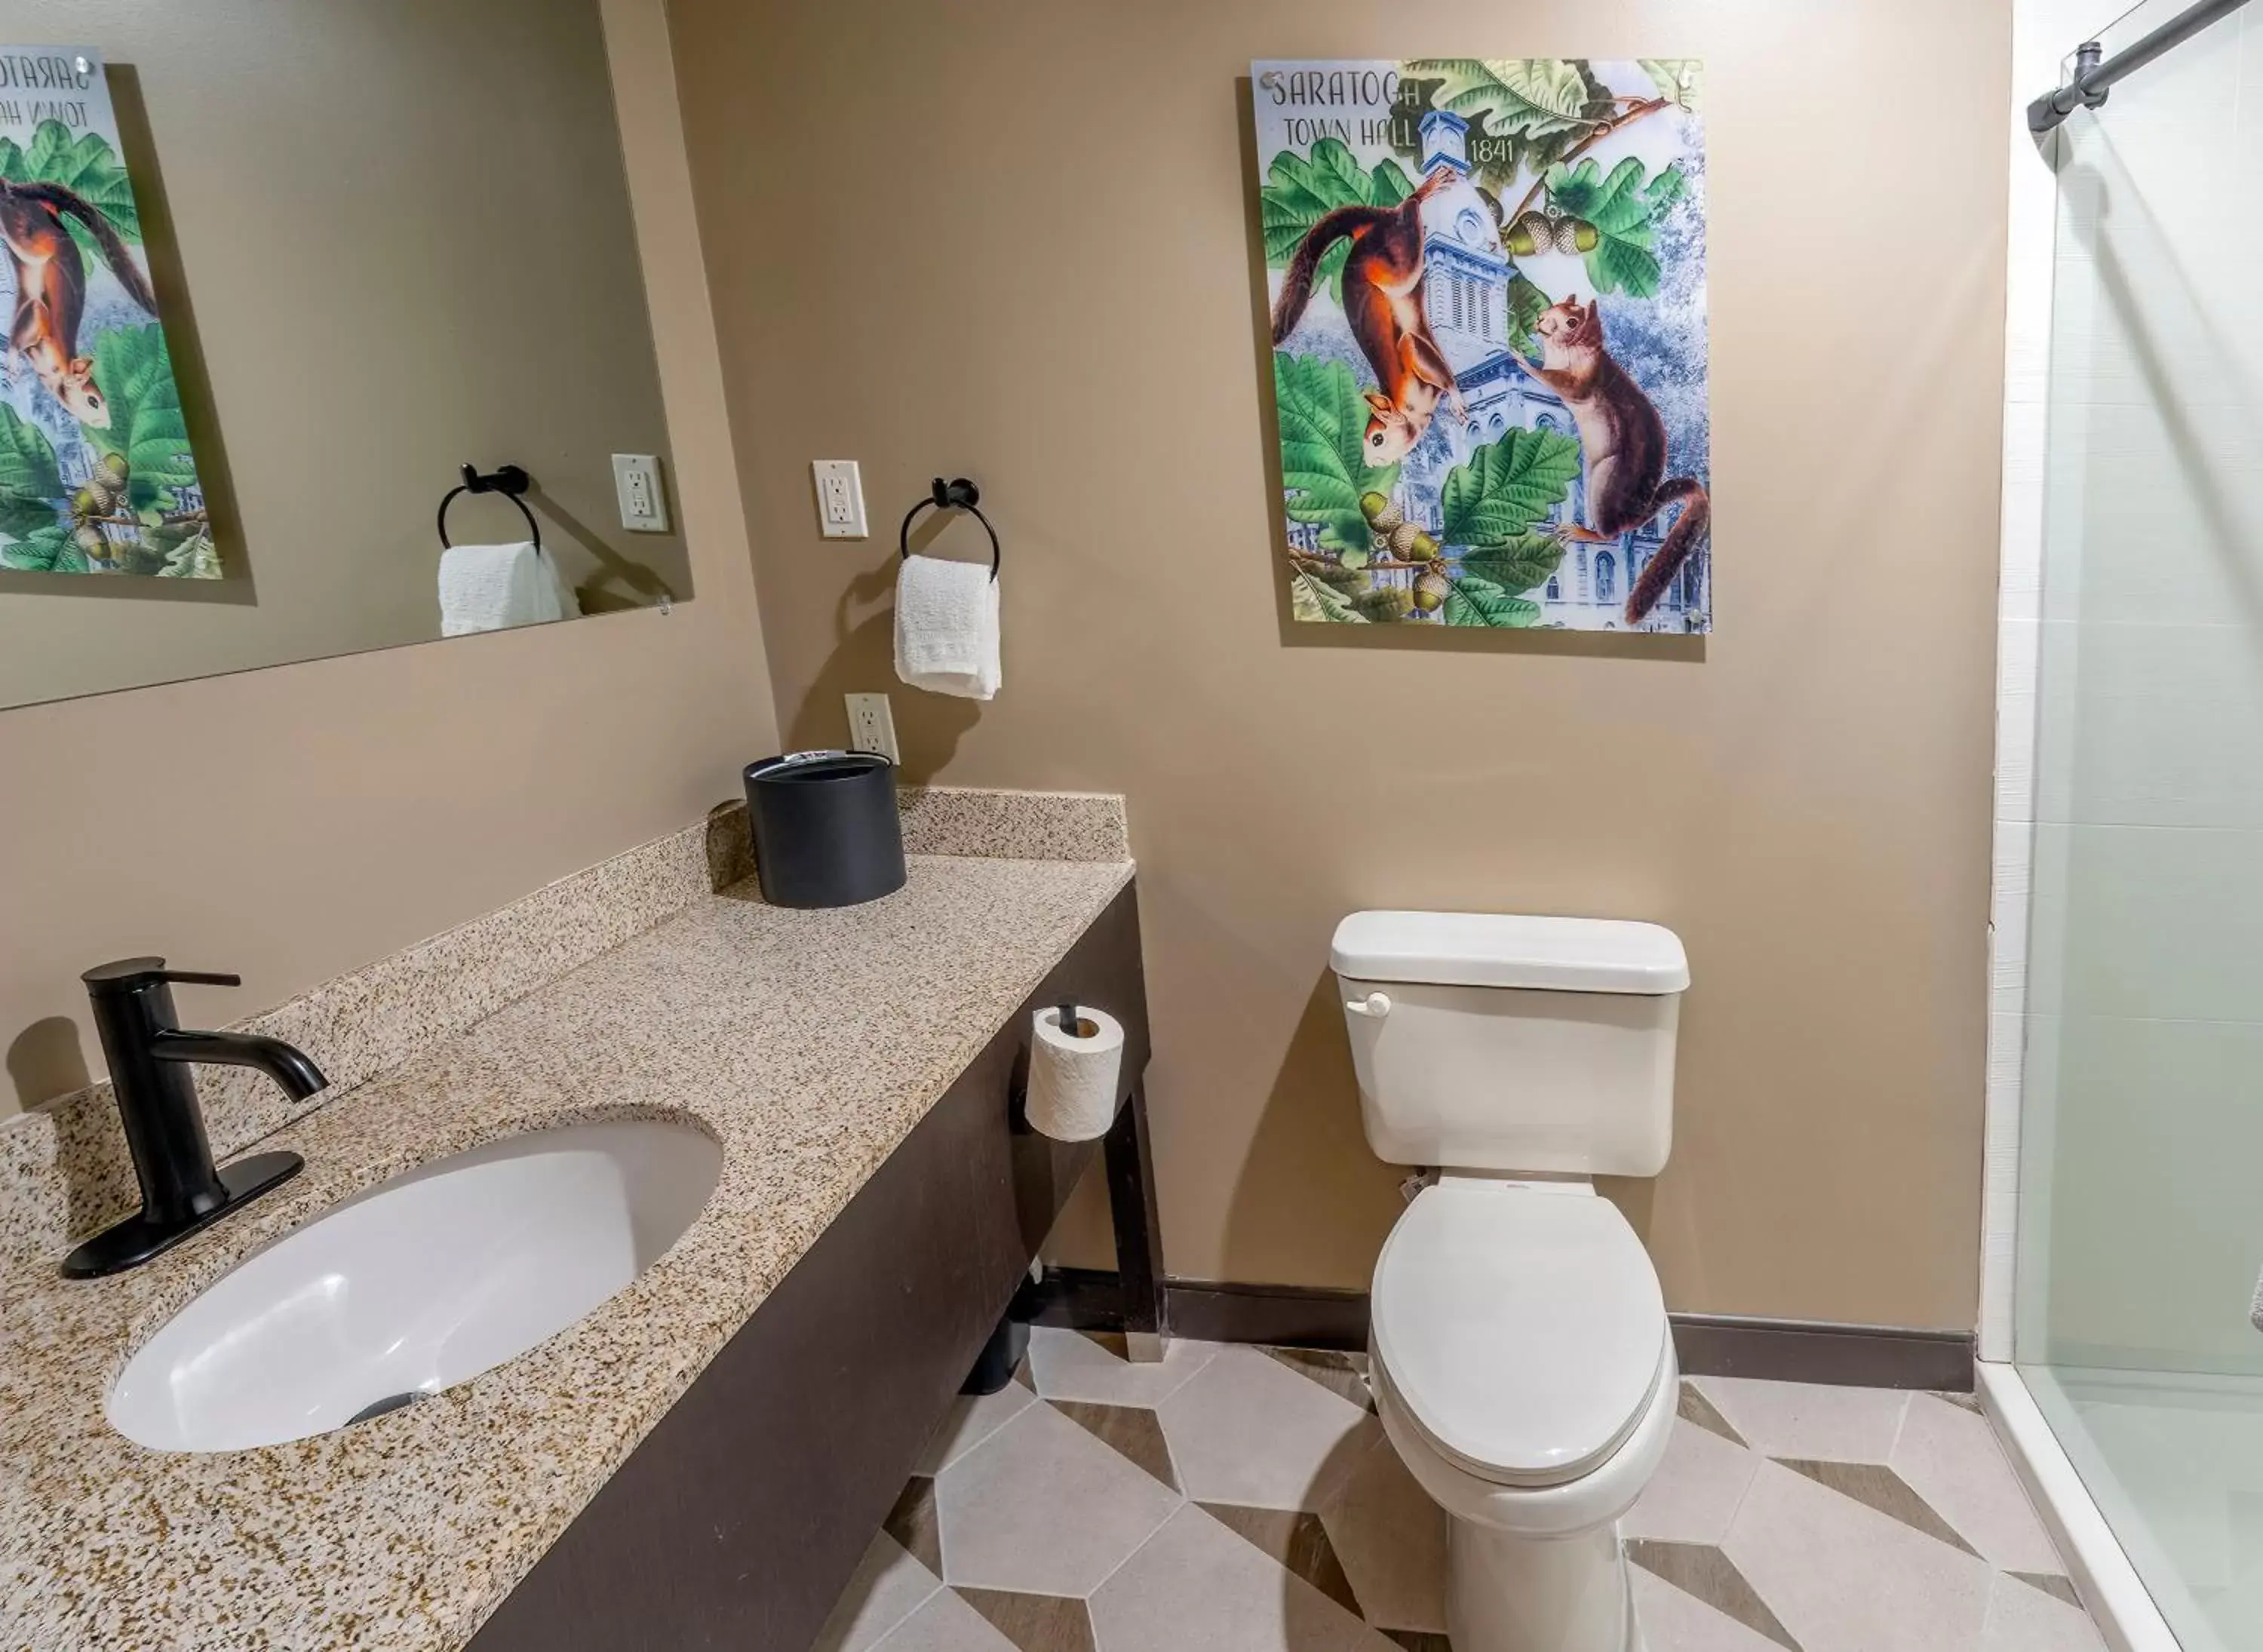 Bathroom in The Hotel Saratoga, Ascend Hotel Collection